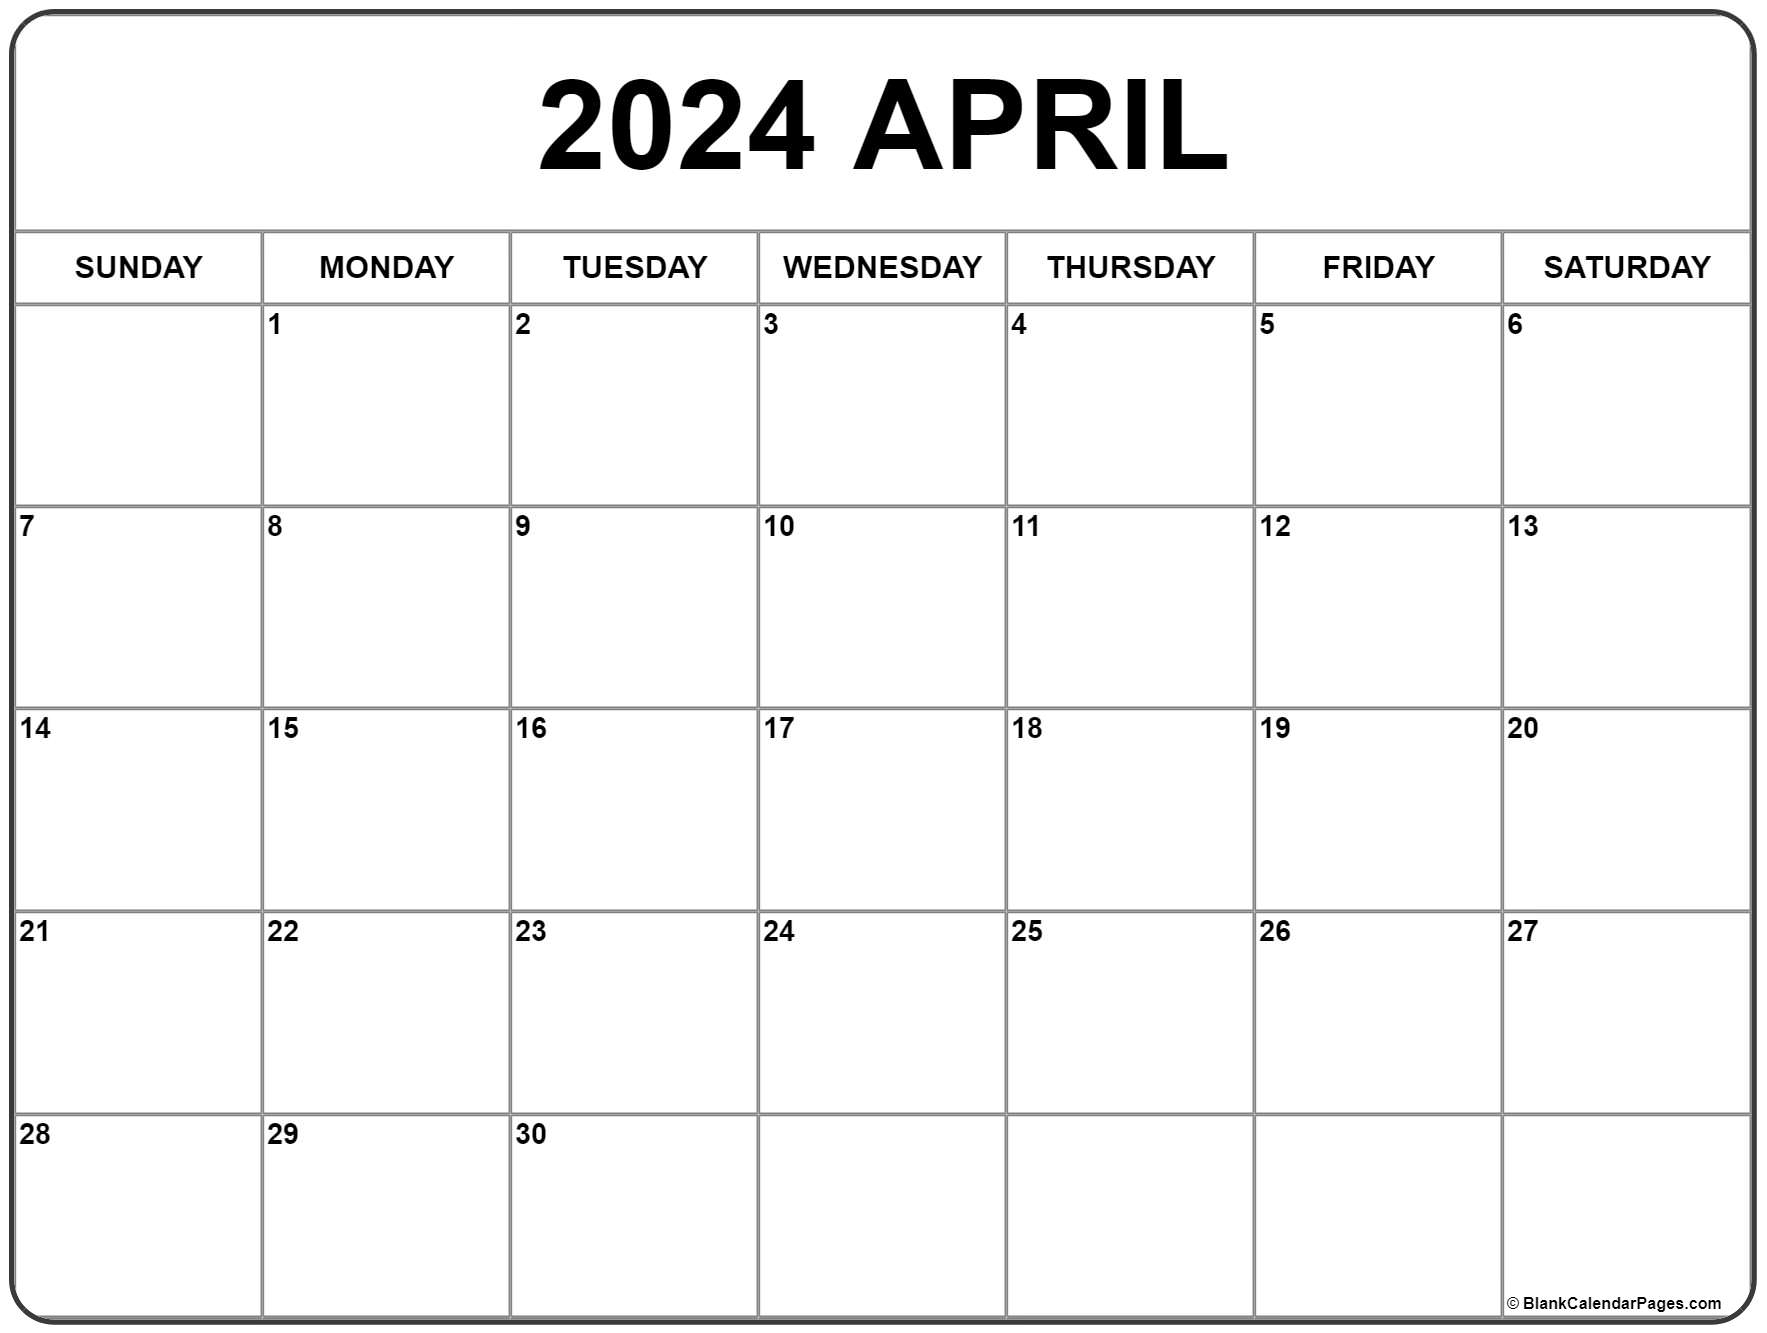 April 2024 Calendar | Free Printable Calendar in April 2024 Calendar Pdf